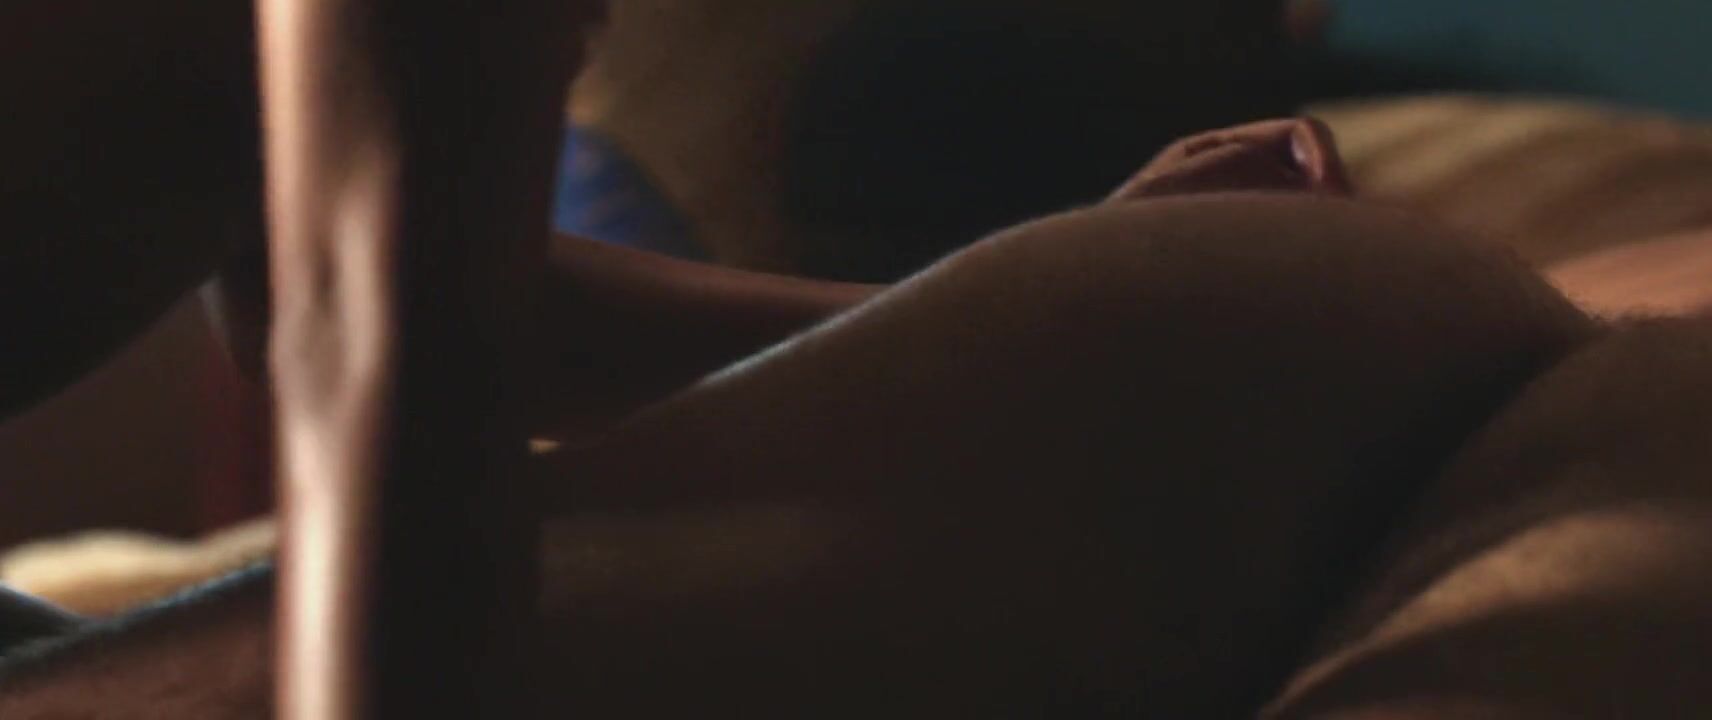 Work Chick from Algeria Zahia Dehar in nude shameless sex scenes from An Easy Girl movie Hymen - 1